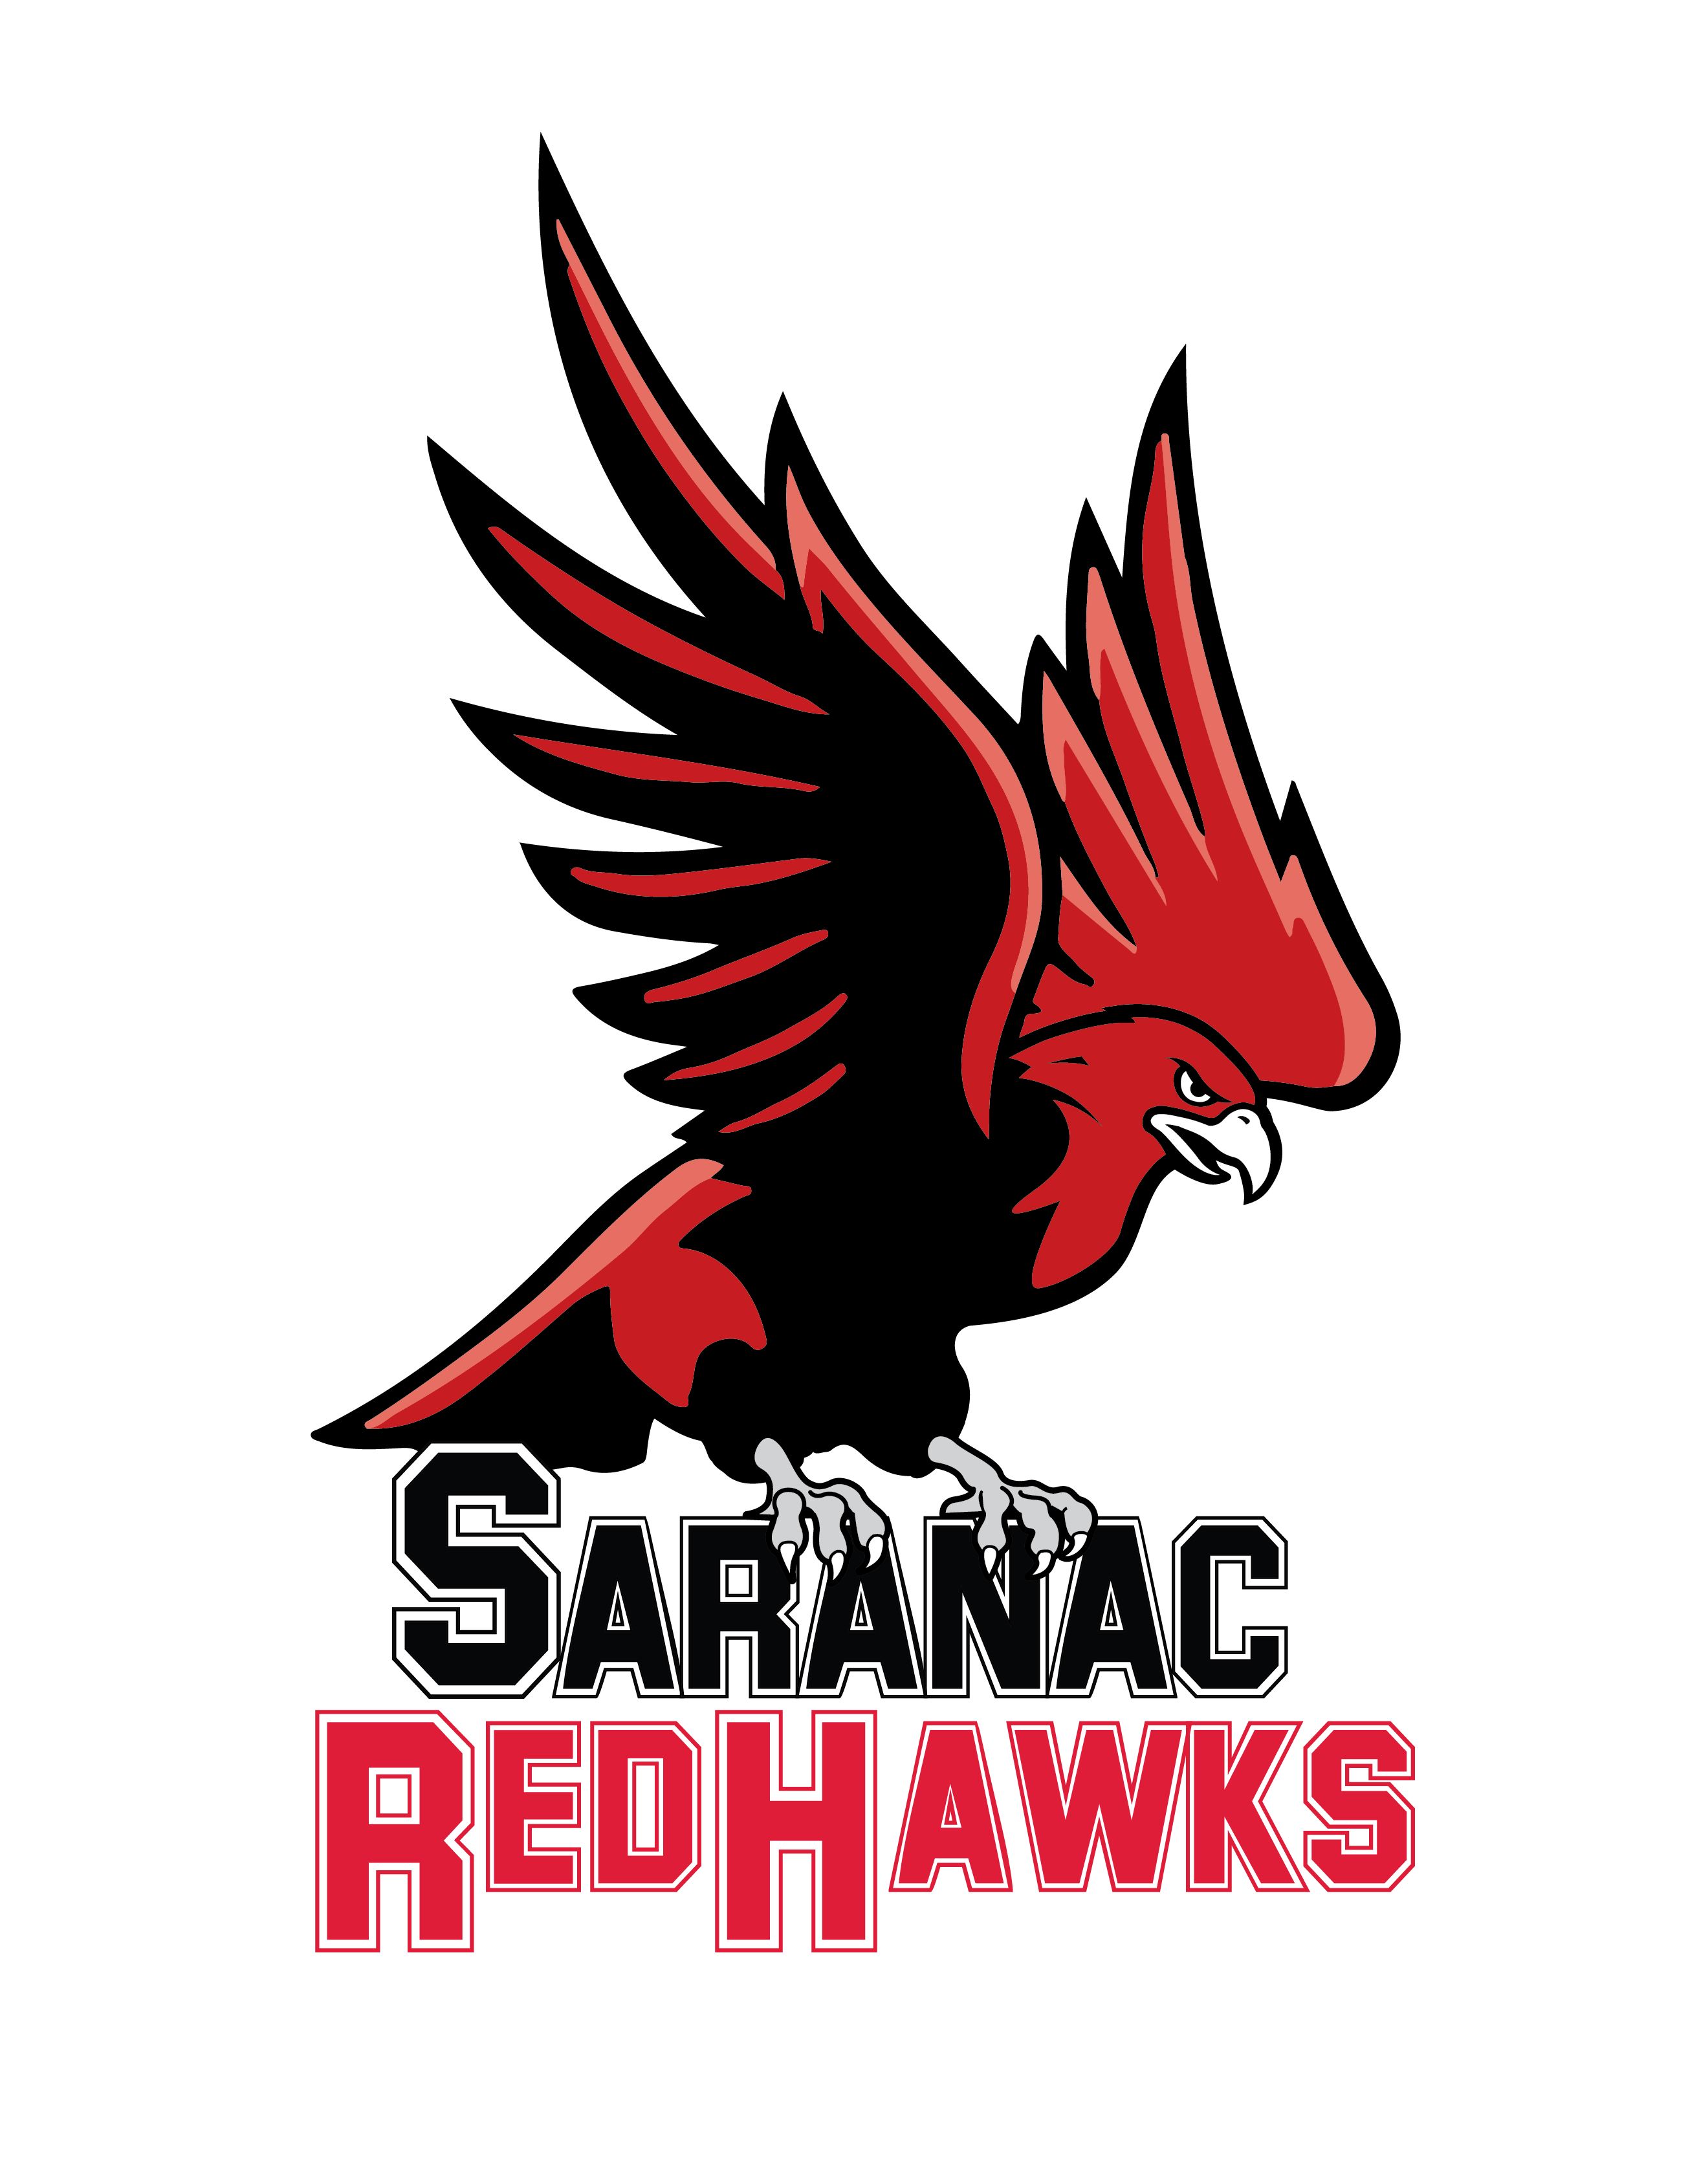 Redhawk text